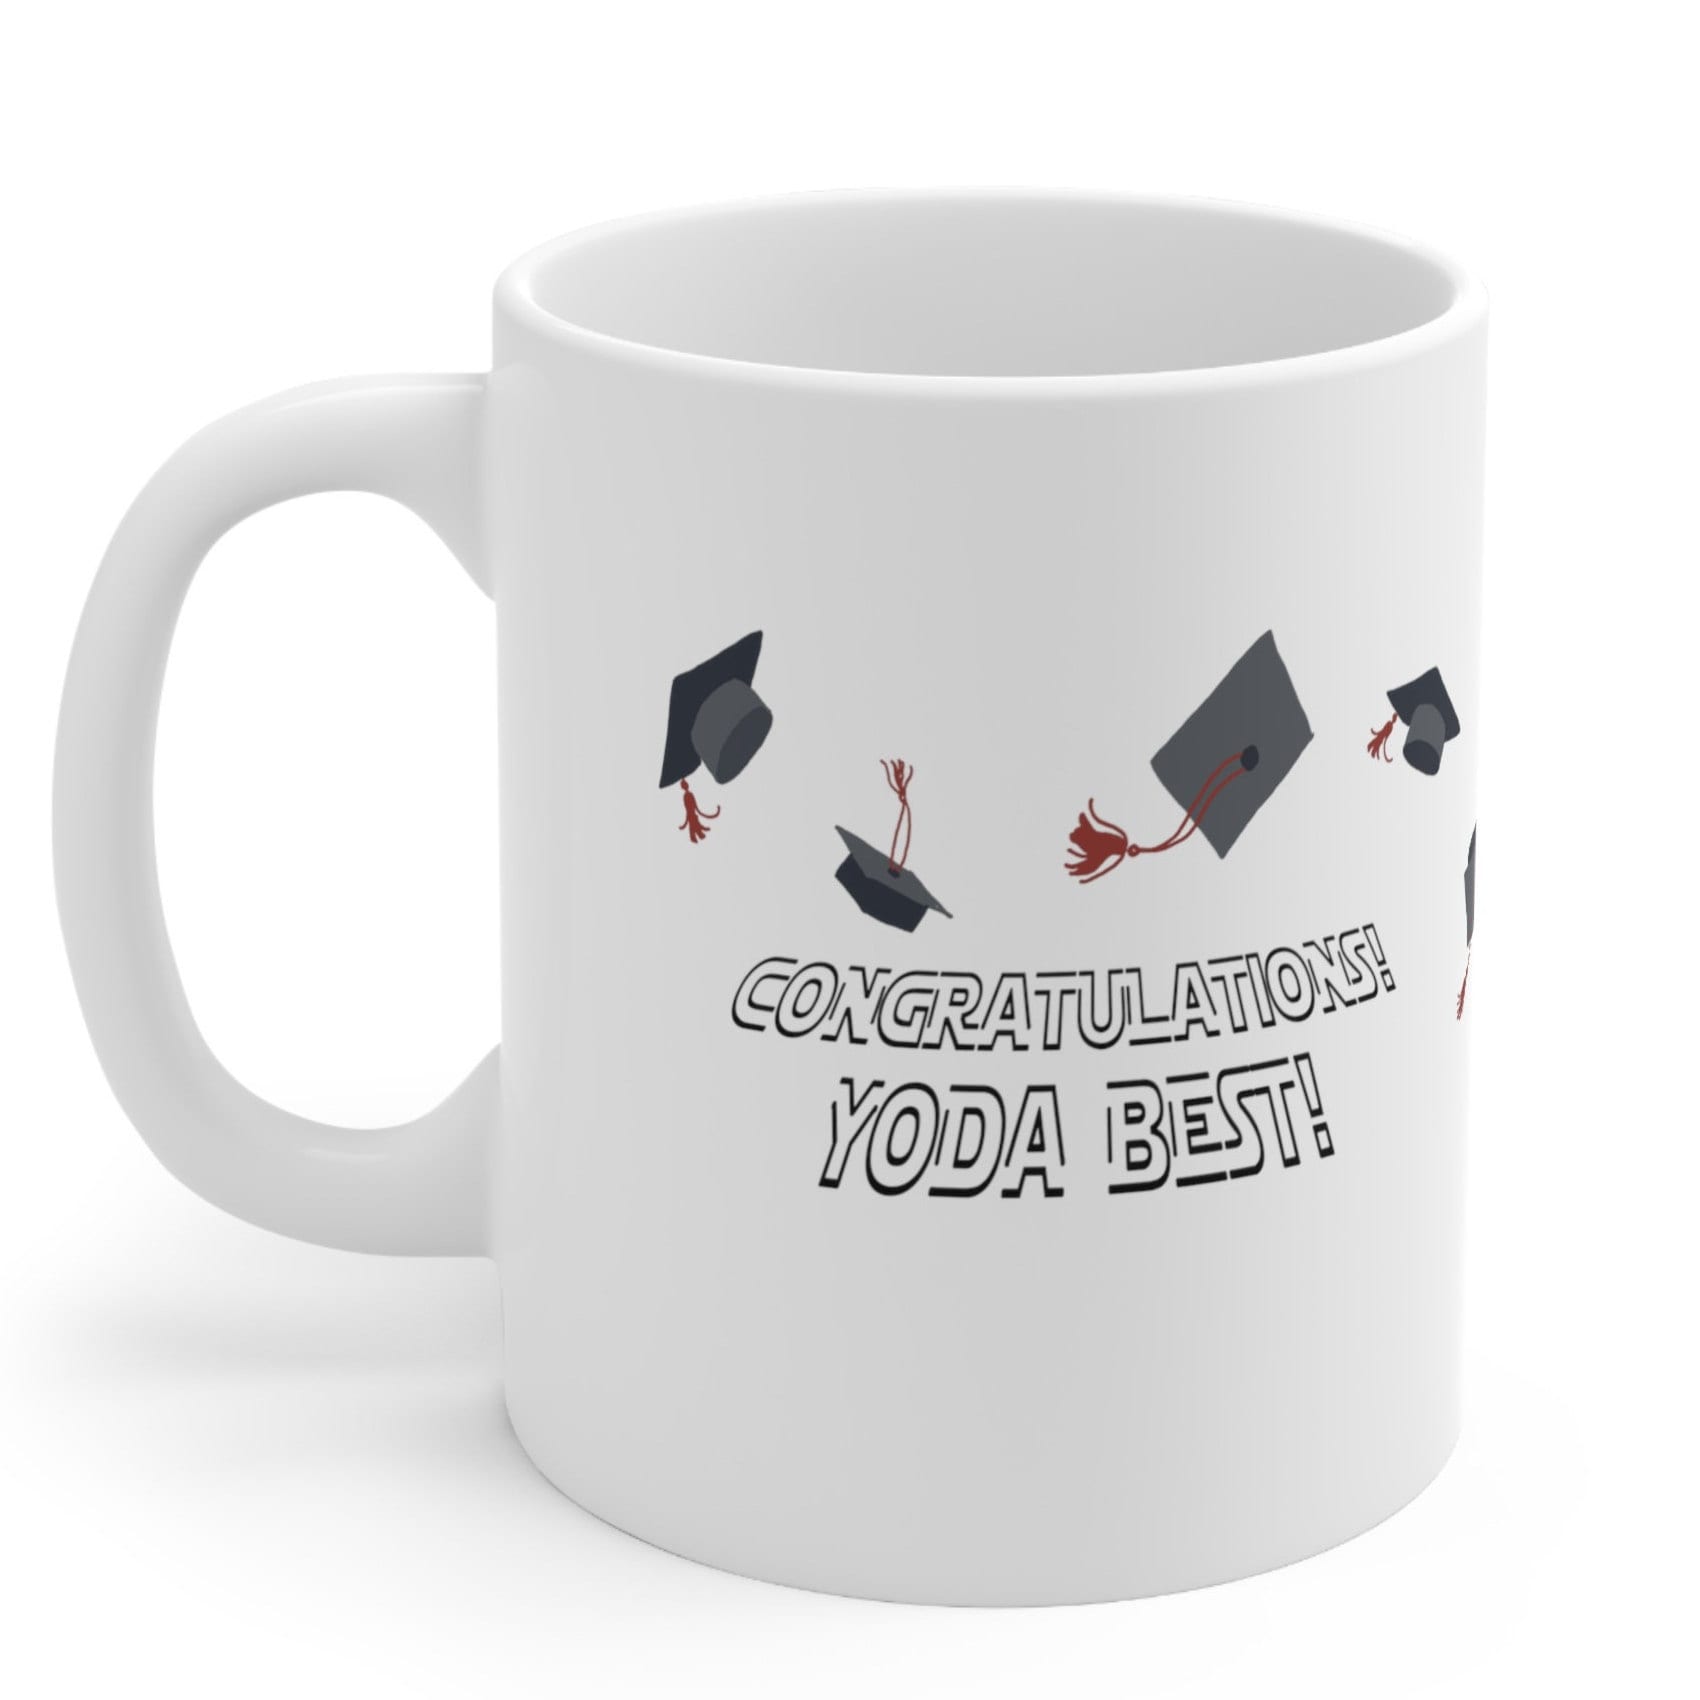 Baby Yoda Coffee Mug - Graduation School gifts Cute ceramic coffee cup mug  sold by George Brooks, SKU 42874724